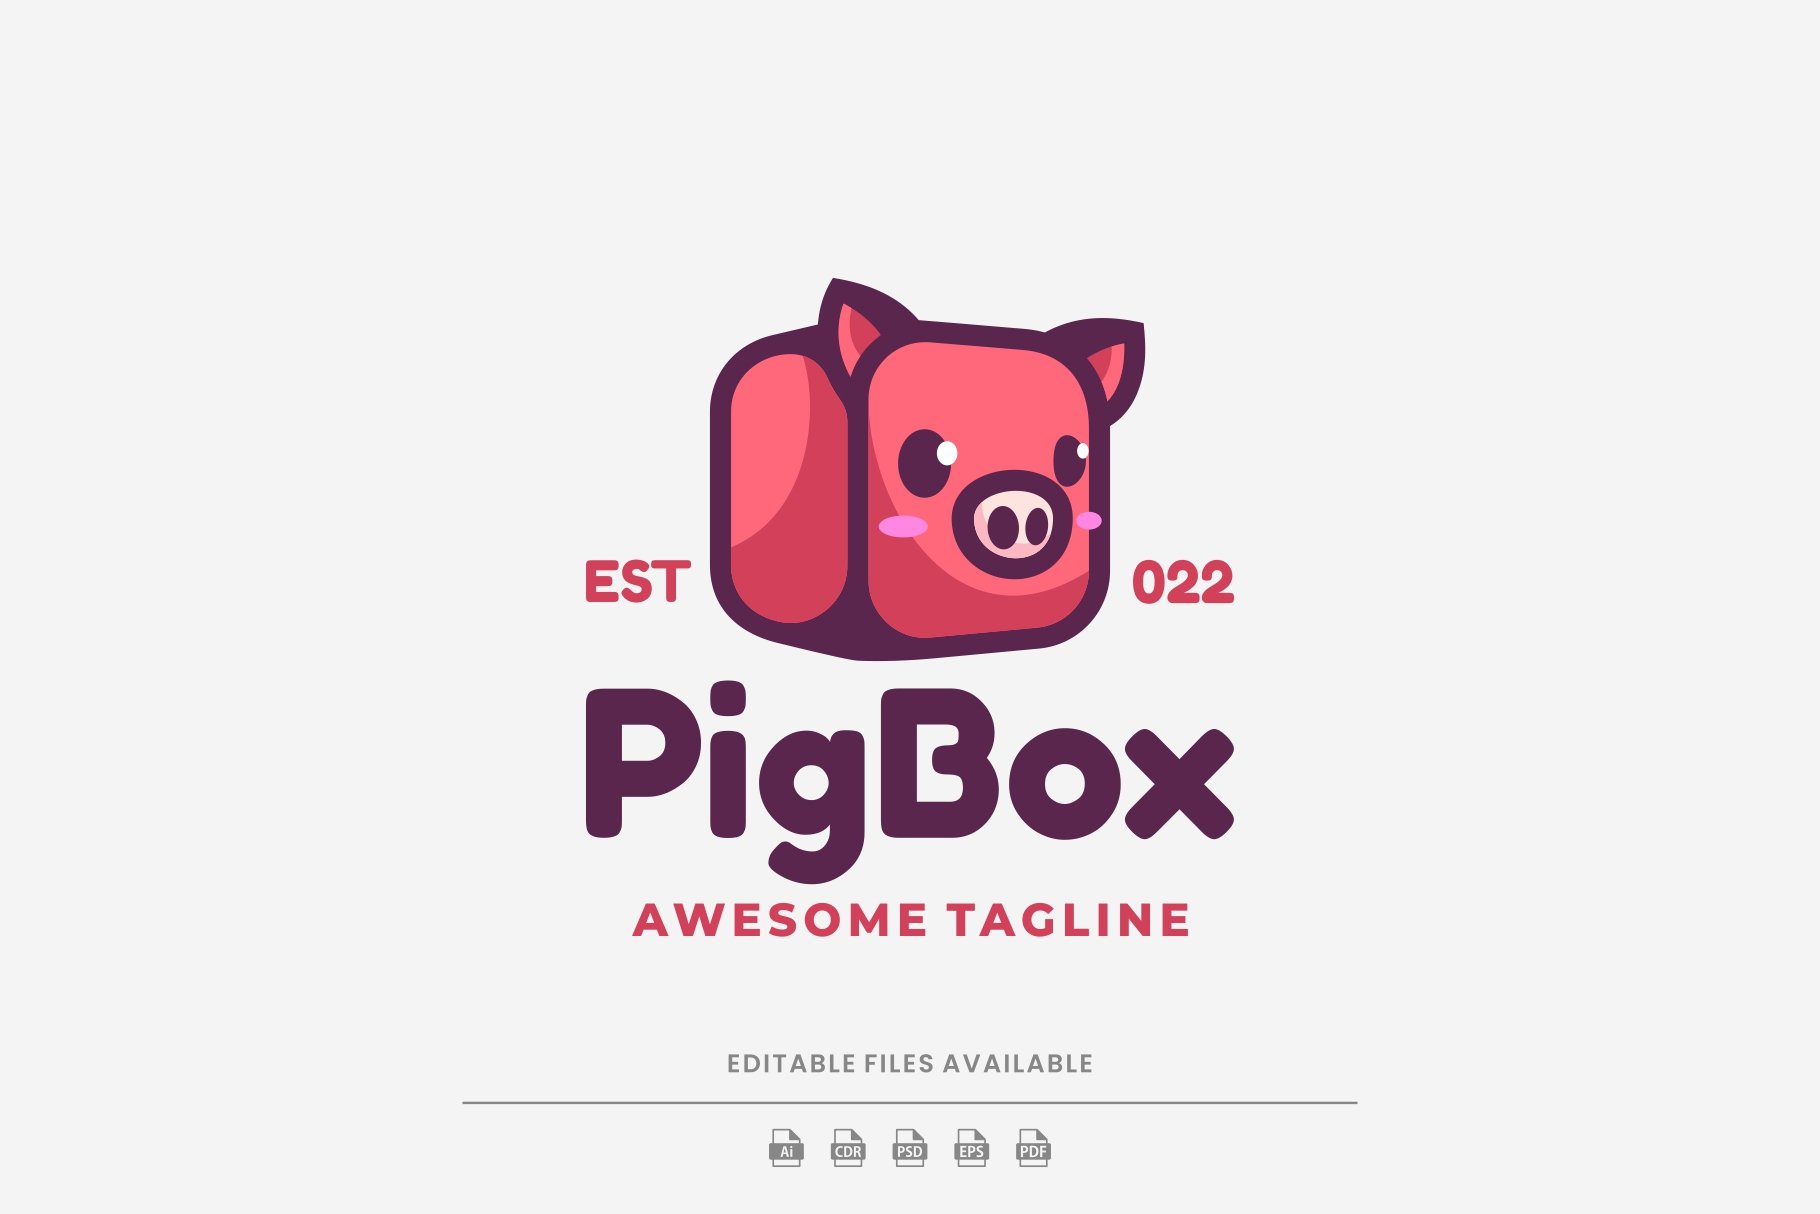 Pig Box Simple Mascot Logo cover image.